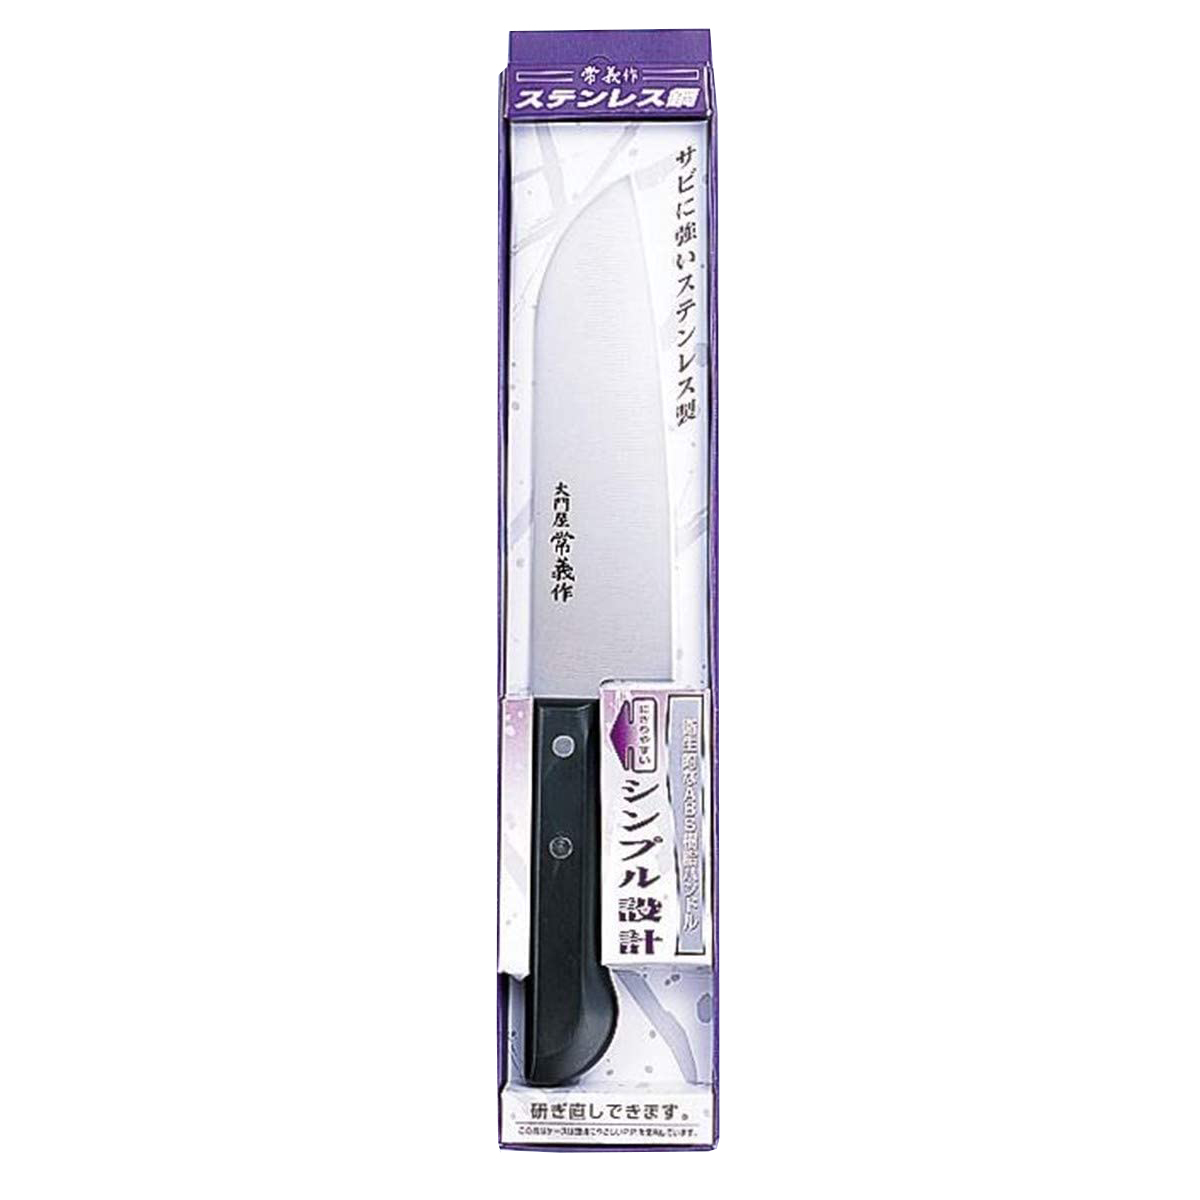 Нож кухонный Сантоку Shimomura, сталь молибден ванадиевая, рукоять пластик ABS - фото 2